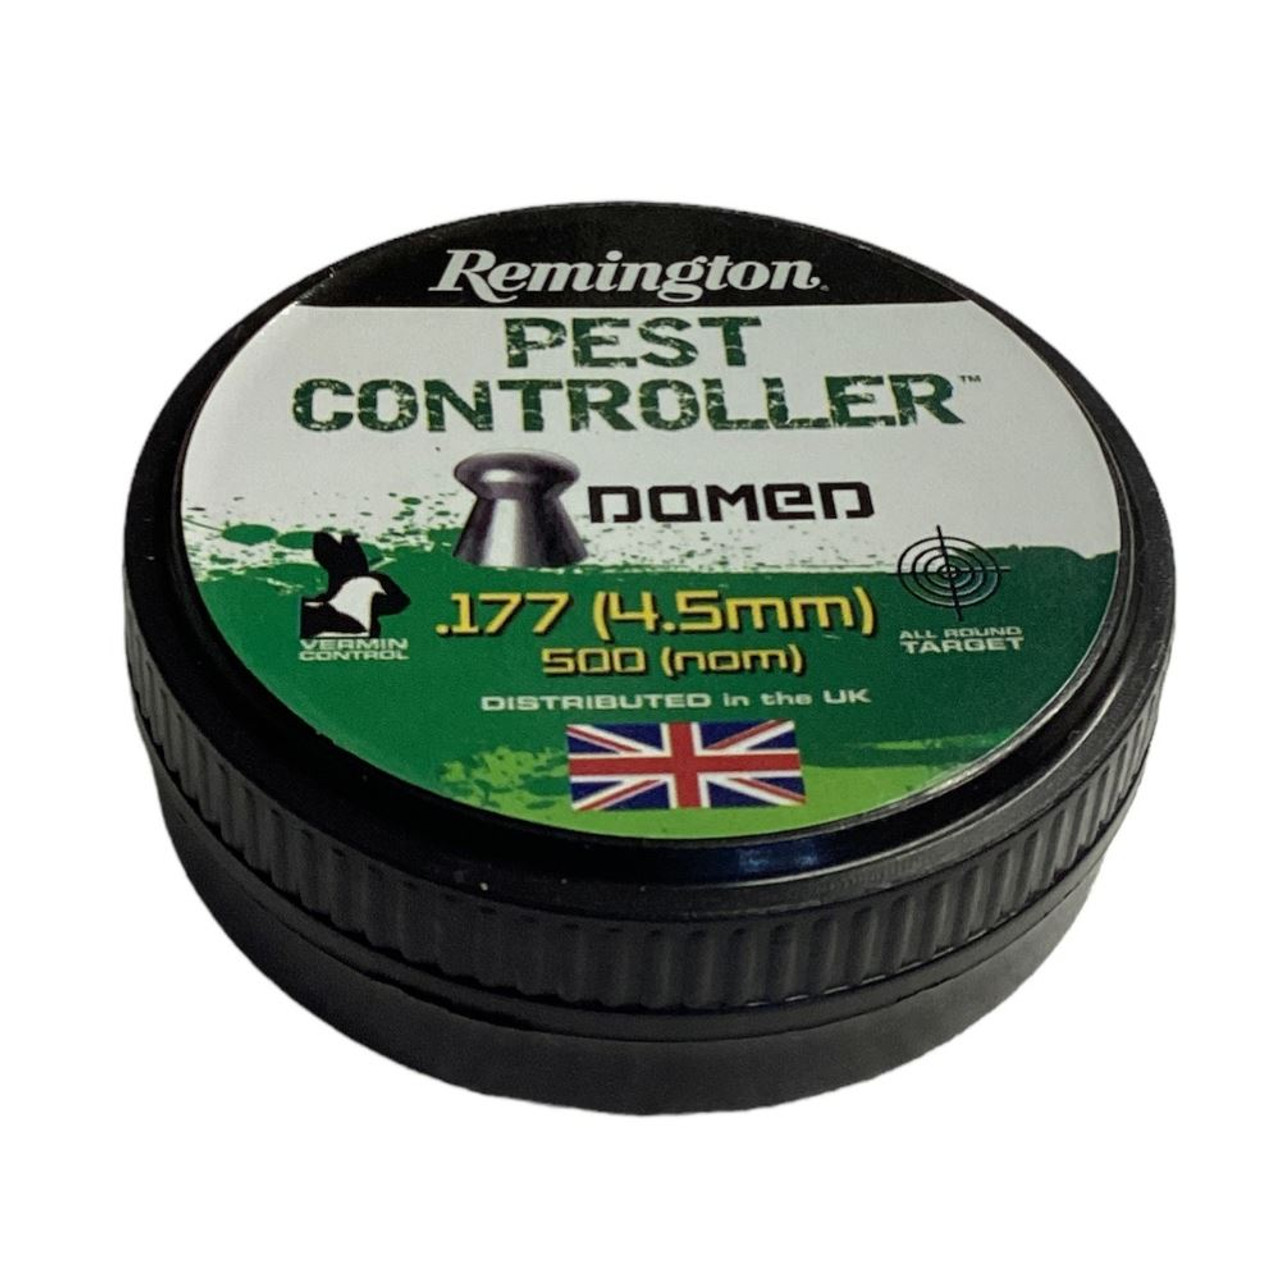 Remington Pest Controller Domed Pellets 500 .177 (4.5mm) Field Target